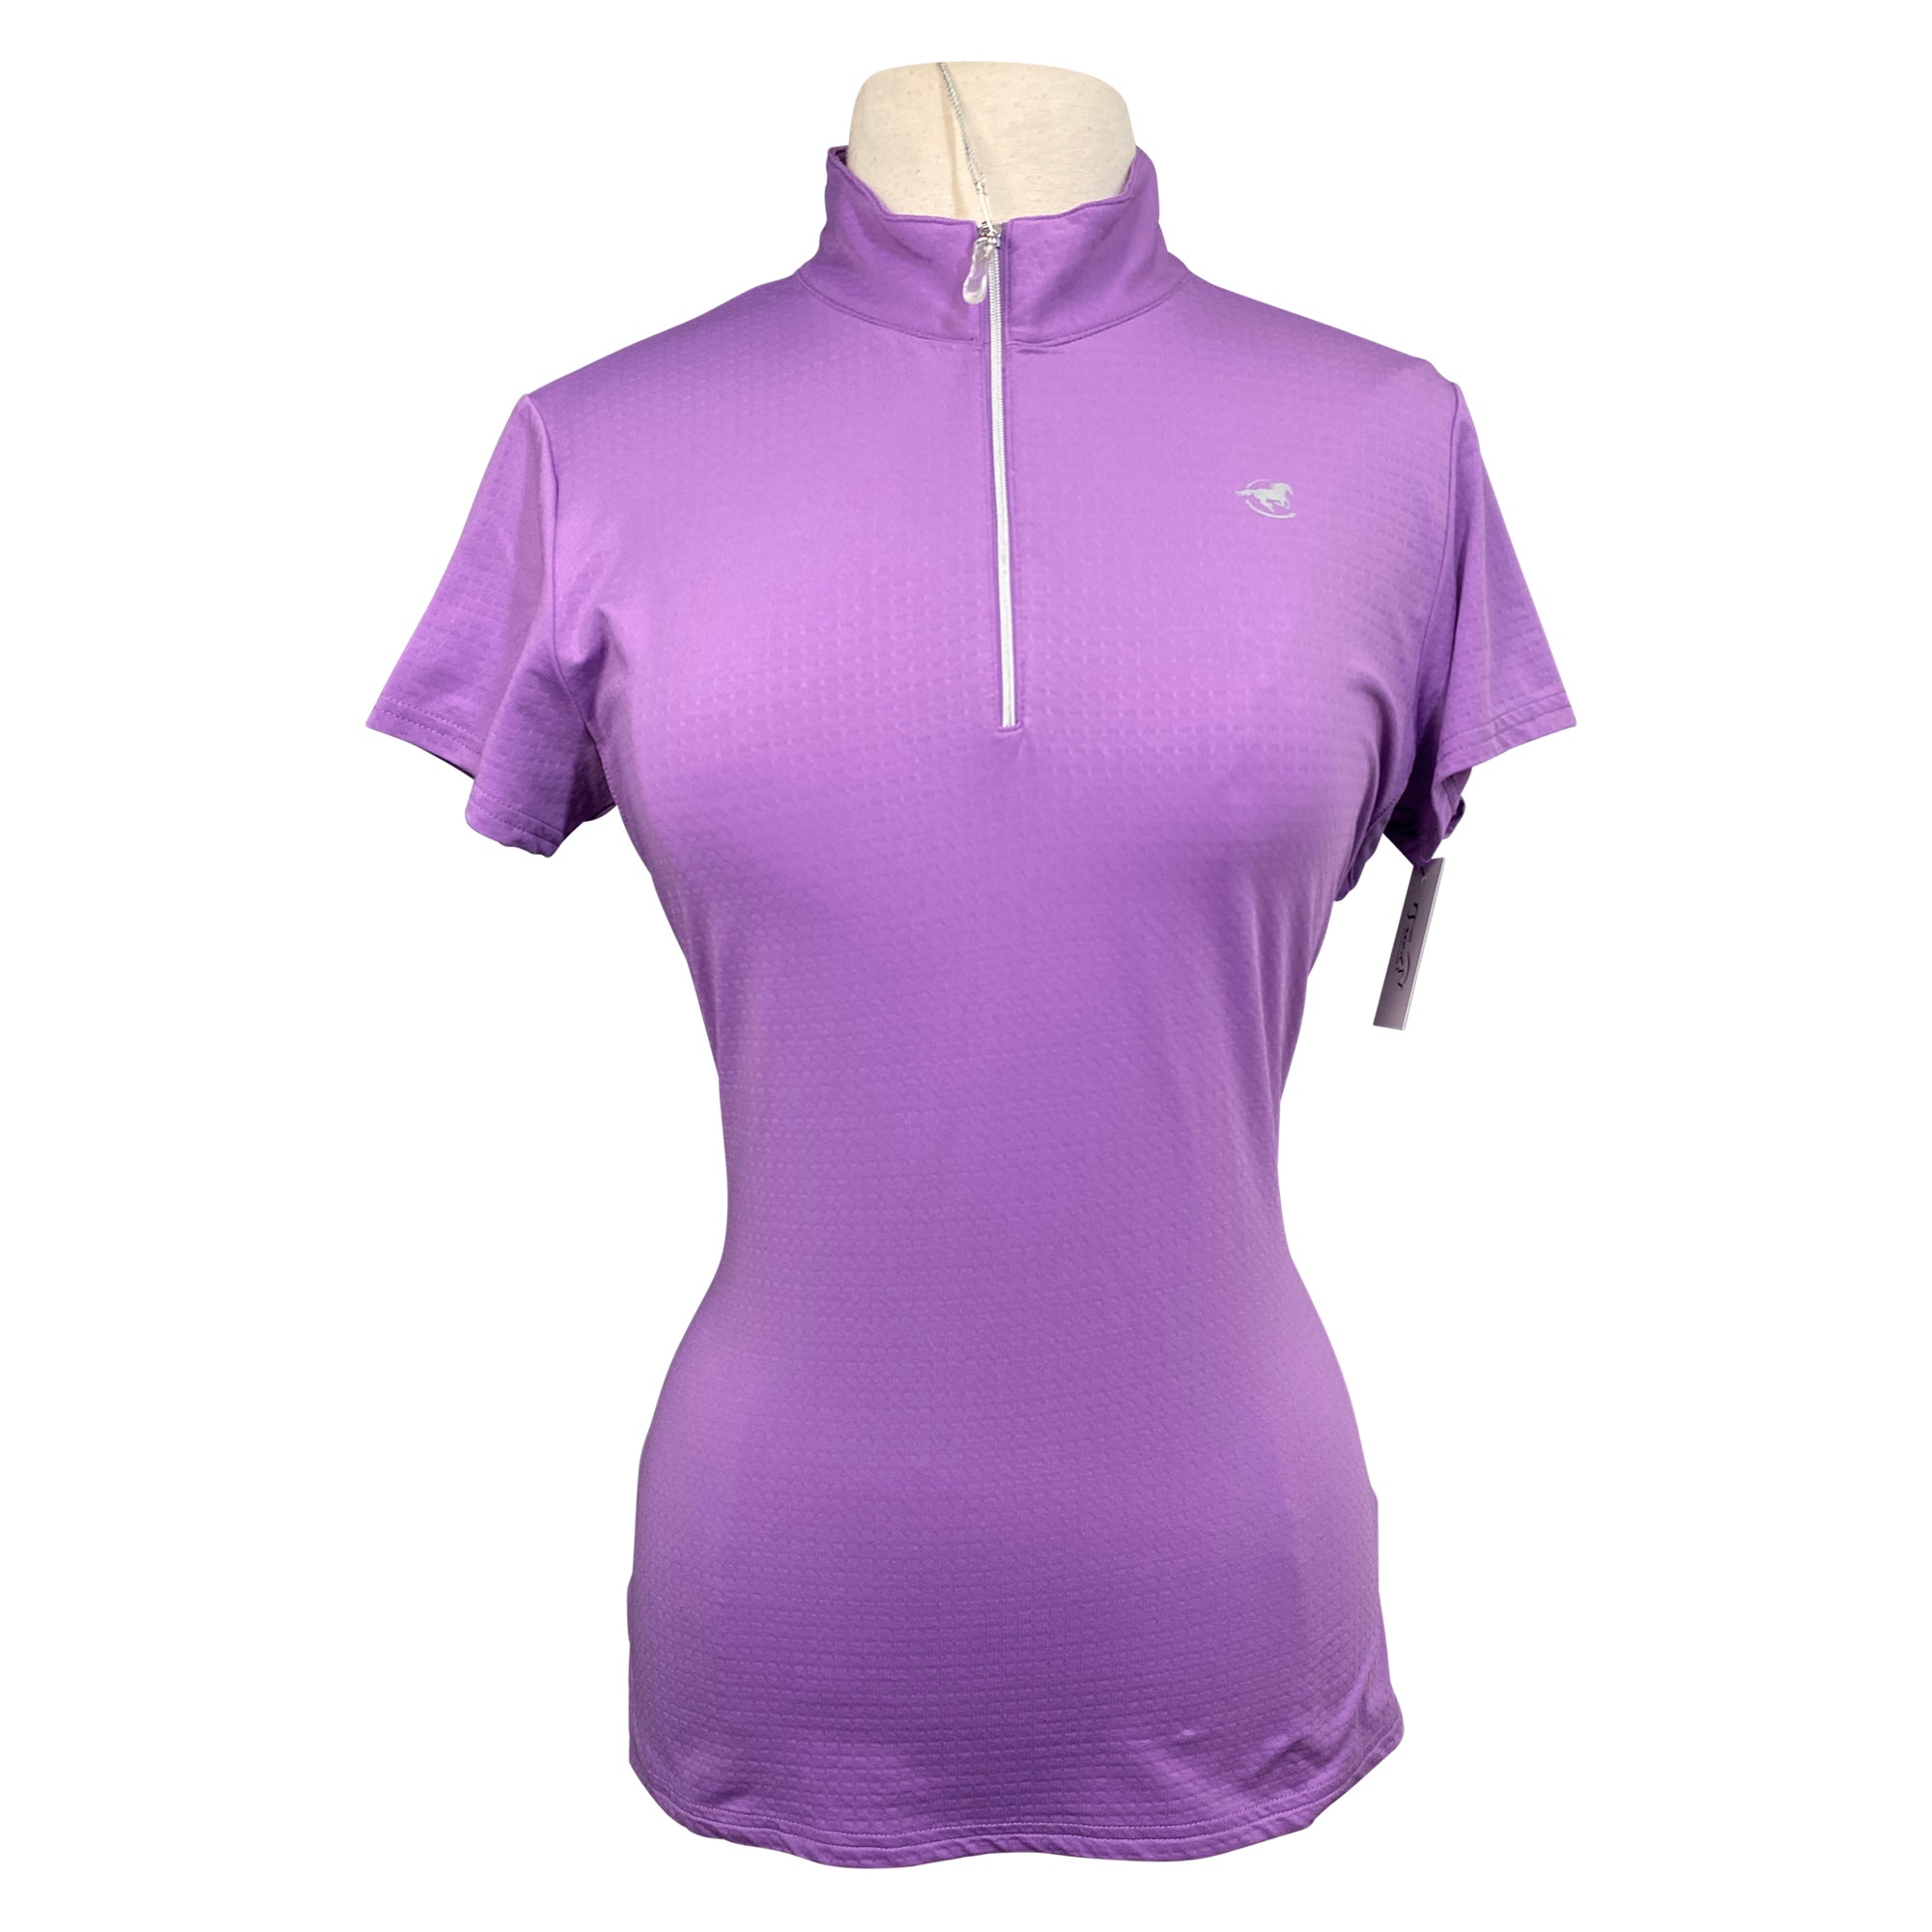 Smartpak 'SunShield' 1/4 Zip Short Sleeve Shirt in Lavender